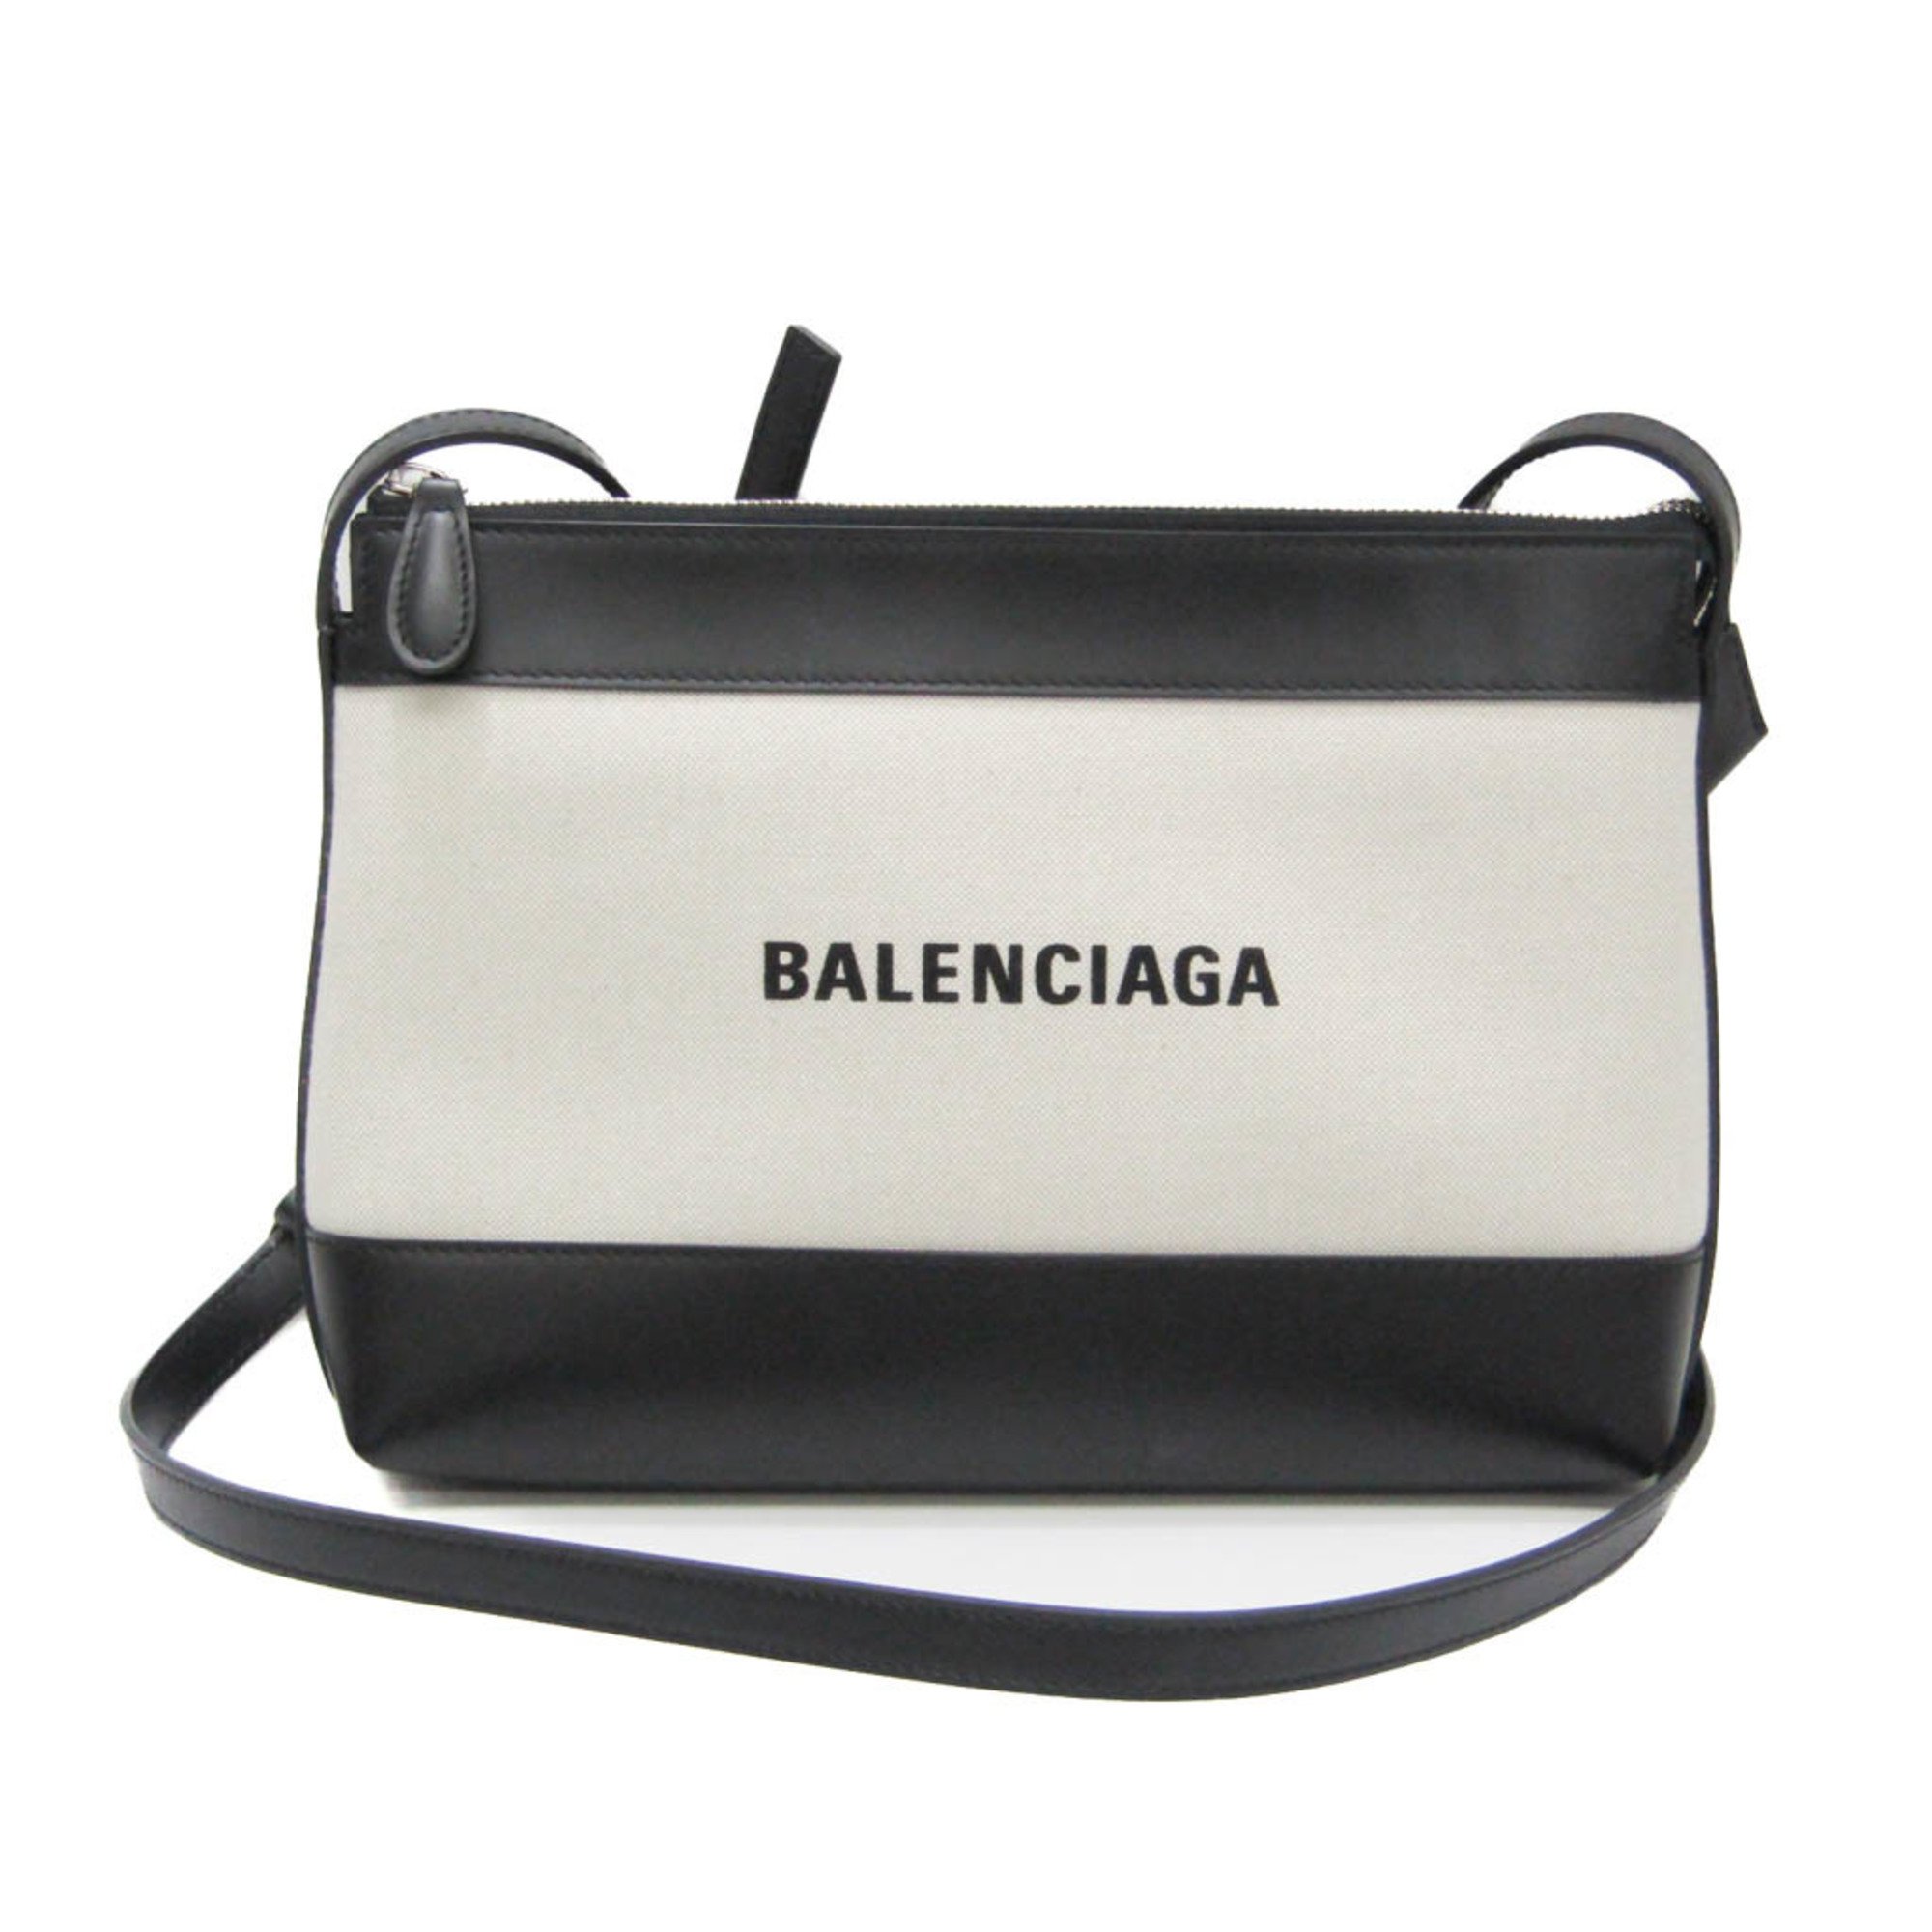 BALENCIAGA 黒キャンバスショルダー - バッグ